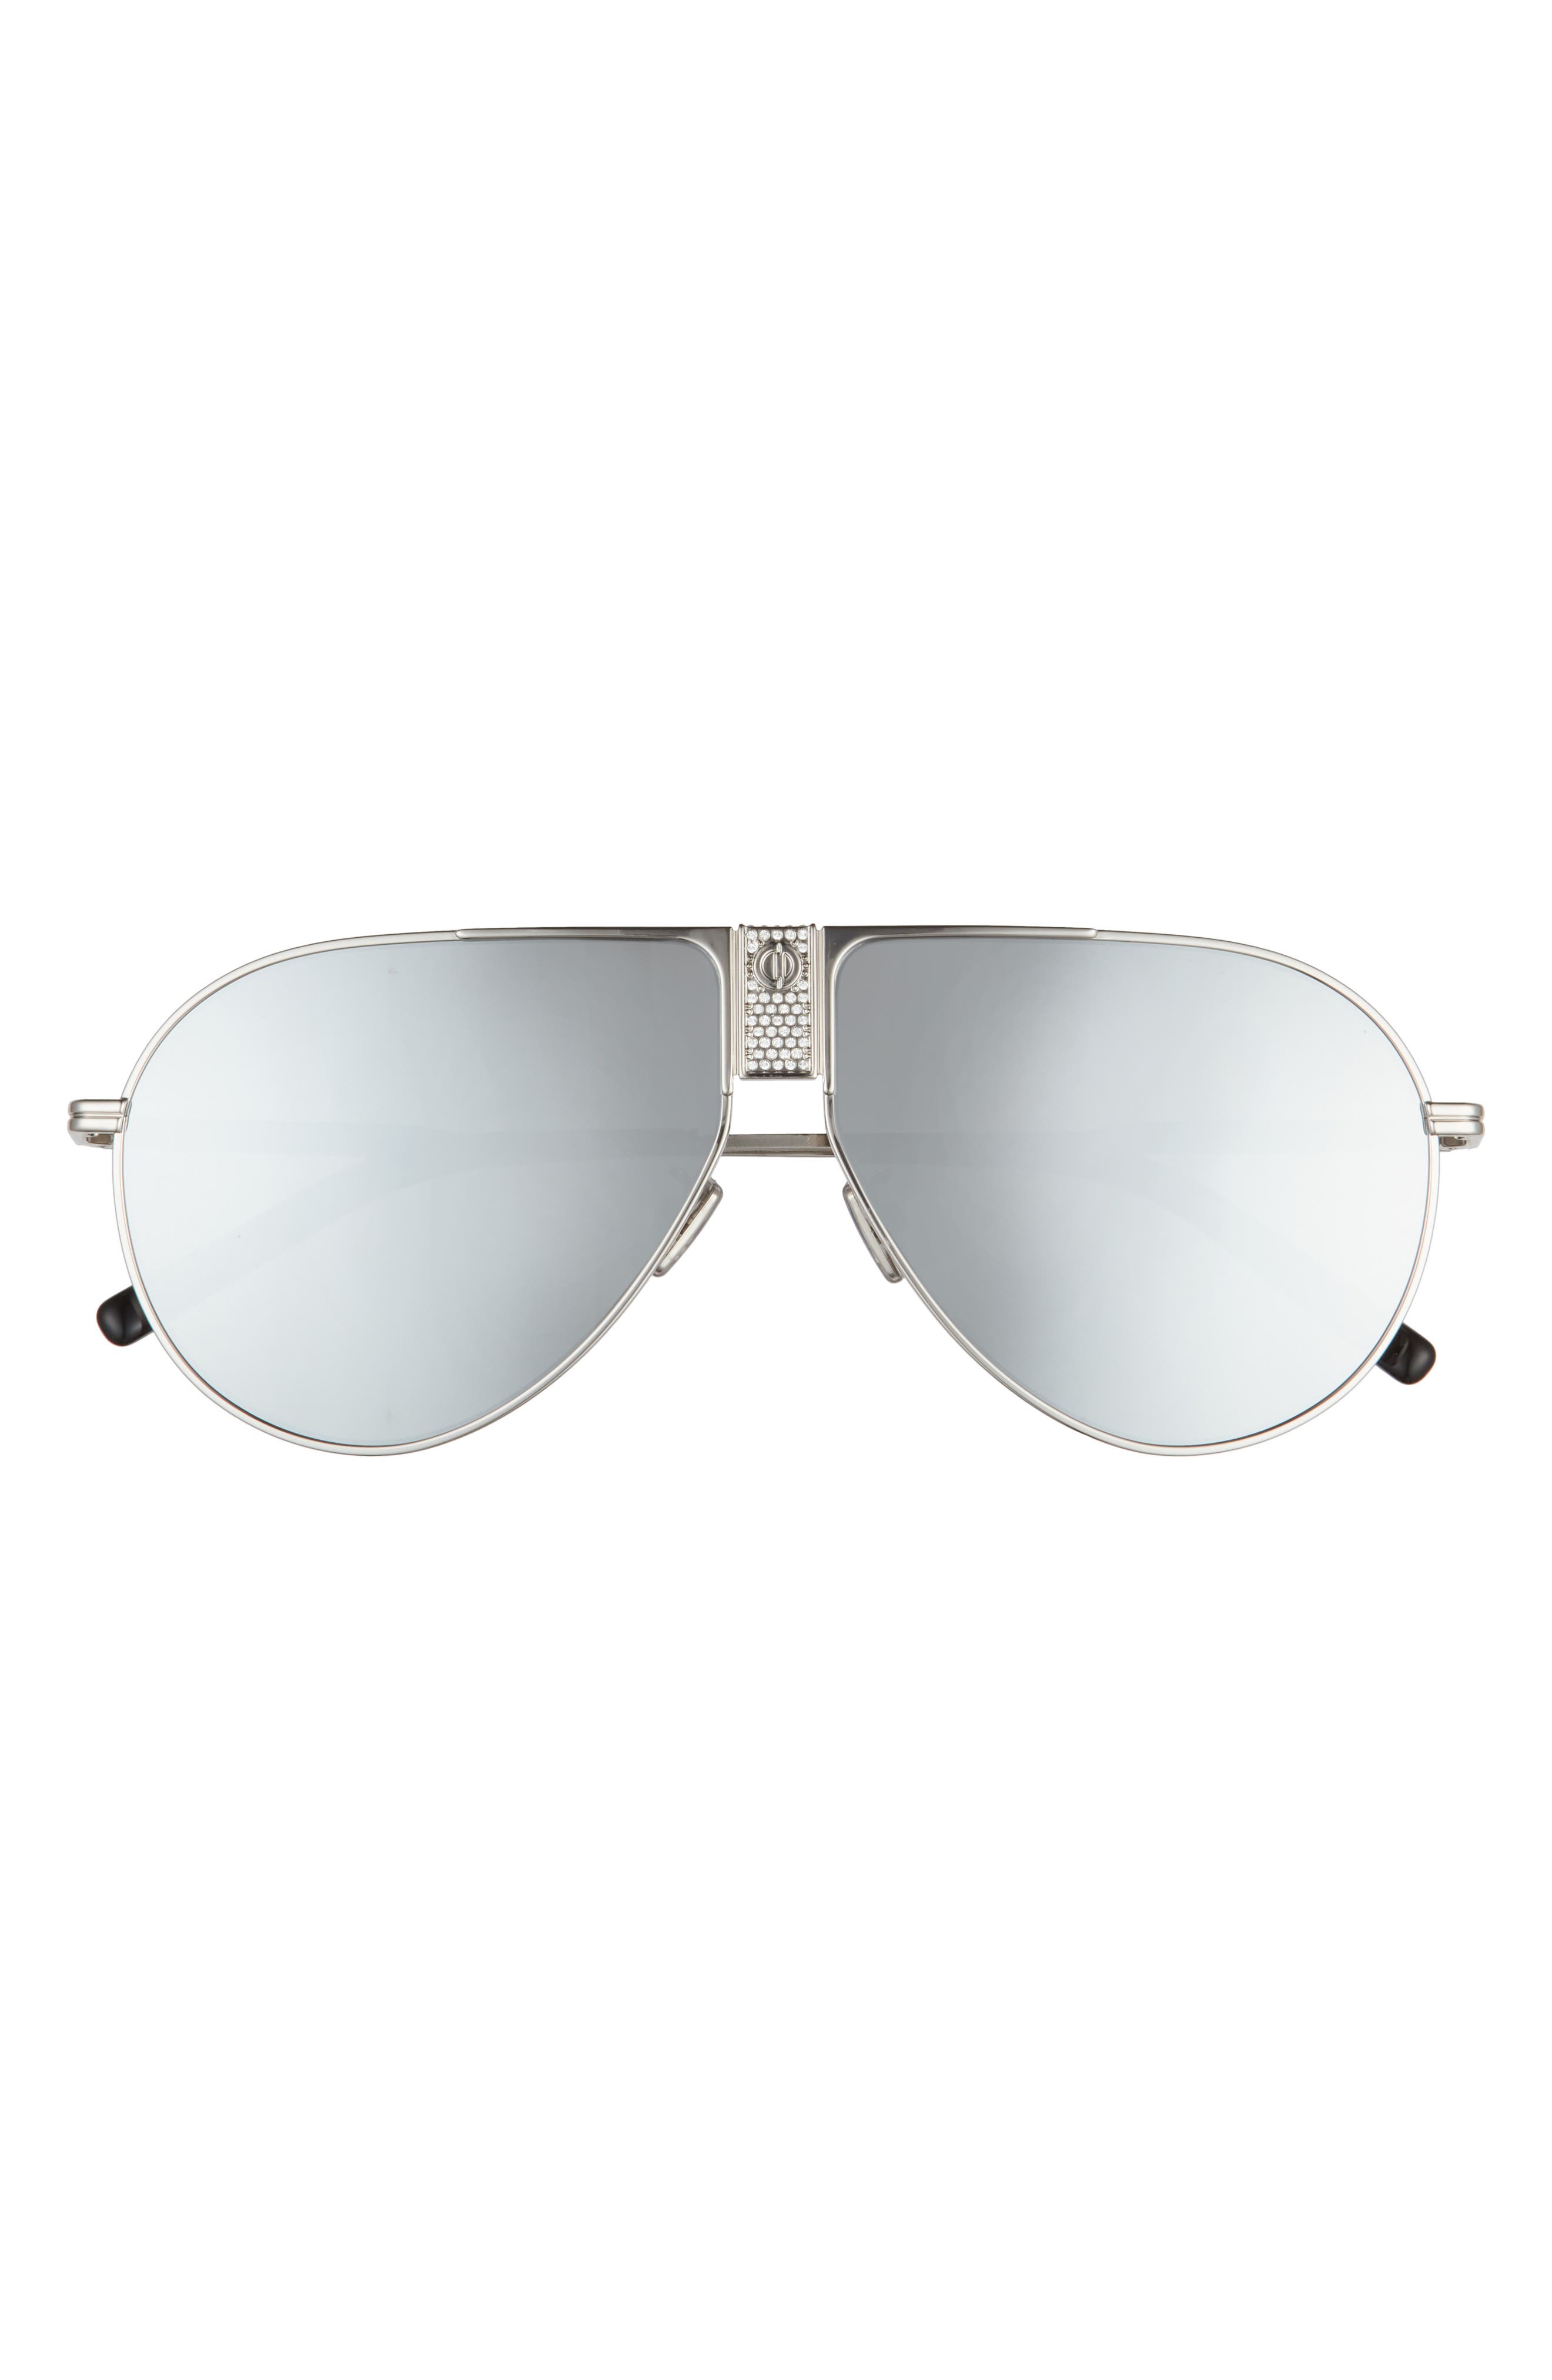 Dior Homme Men's 63mm Aviator Sunglasses in Shiny Palladium/Smoke Mirror